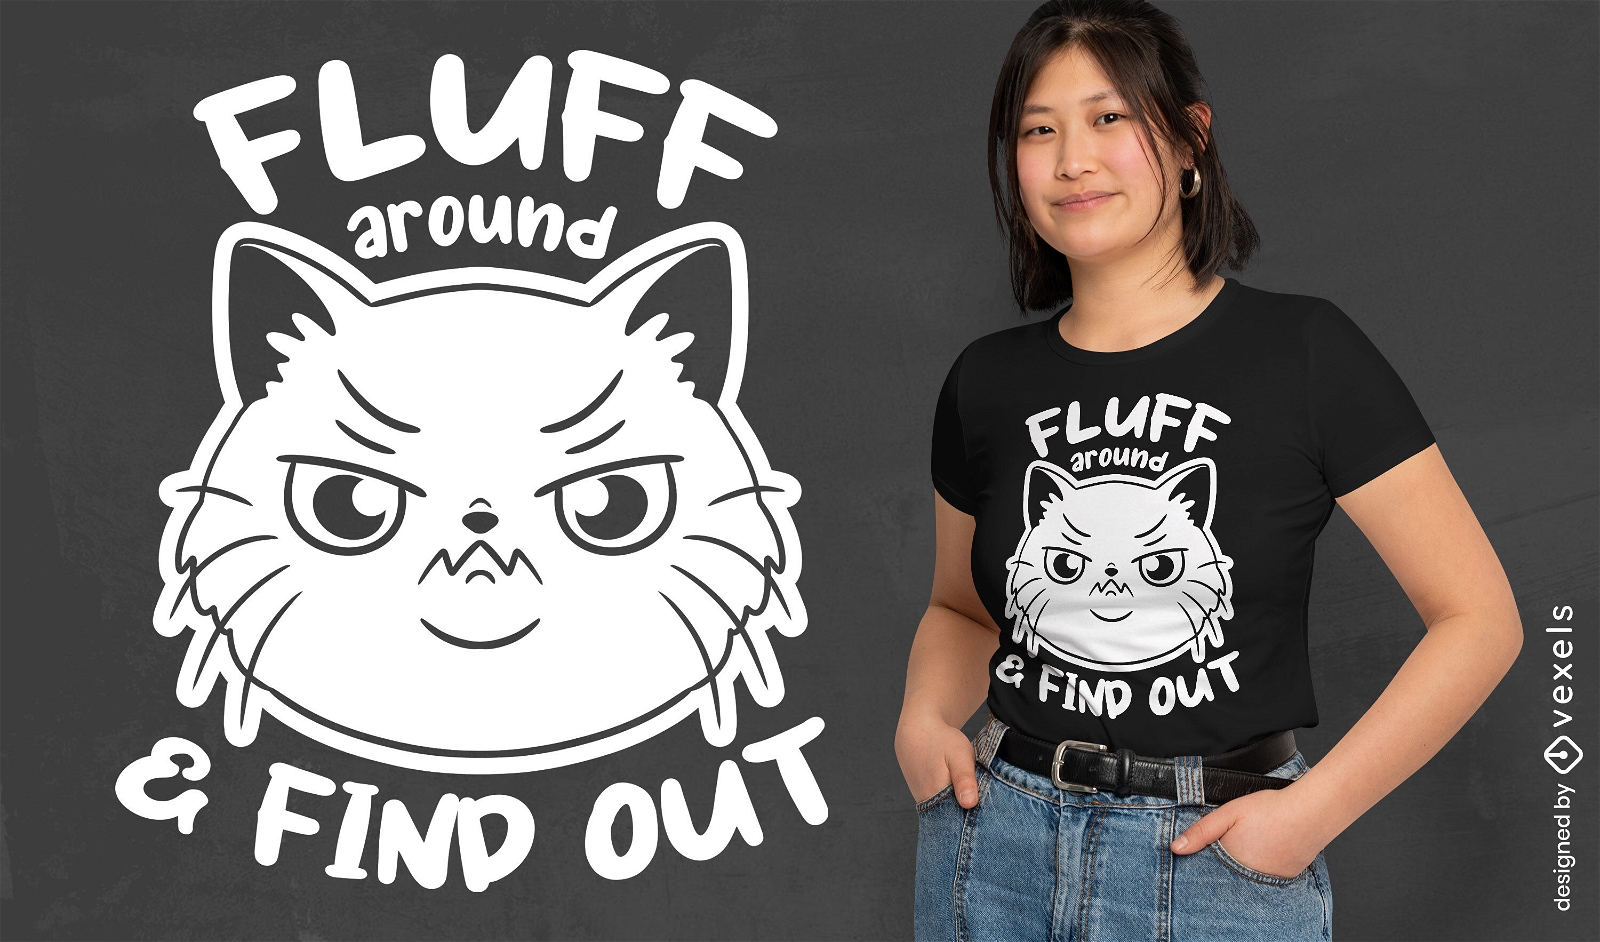 Fluff around funny cat quote t-shirt design